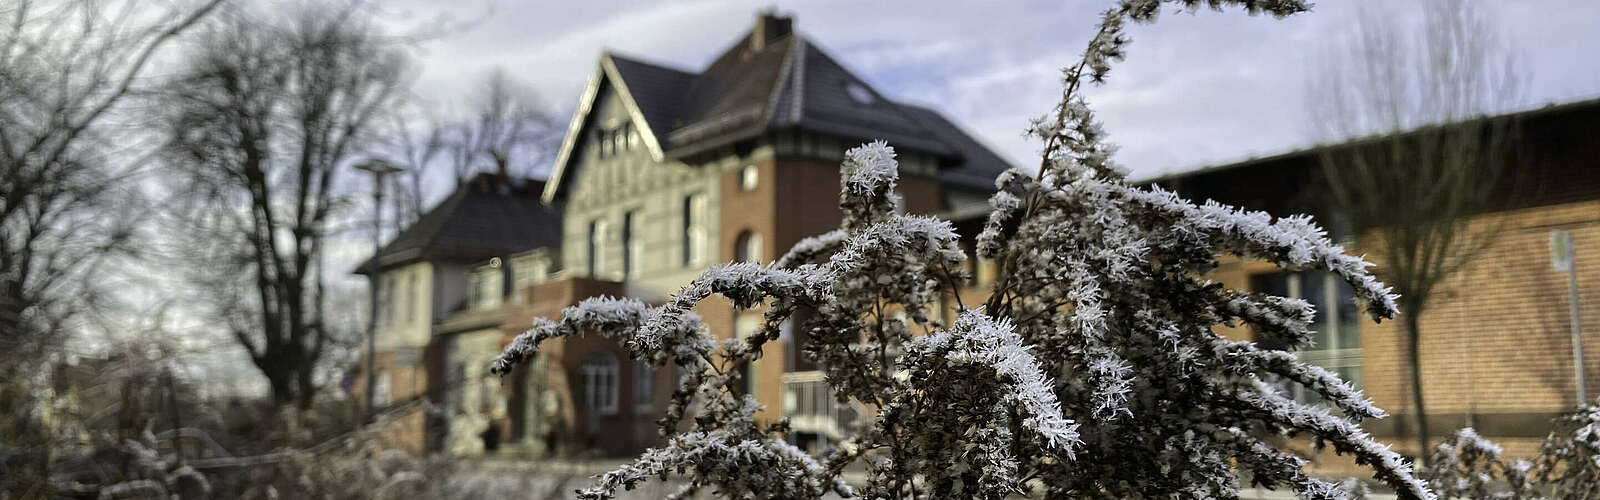 Beelitzer Bahnhof im Winter,
        
    

        Foto: Tourismusverband Fläming e.V./Susan Gutperl